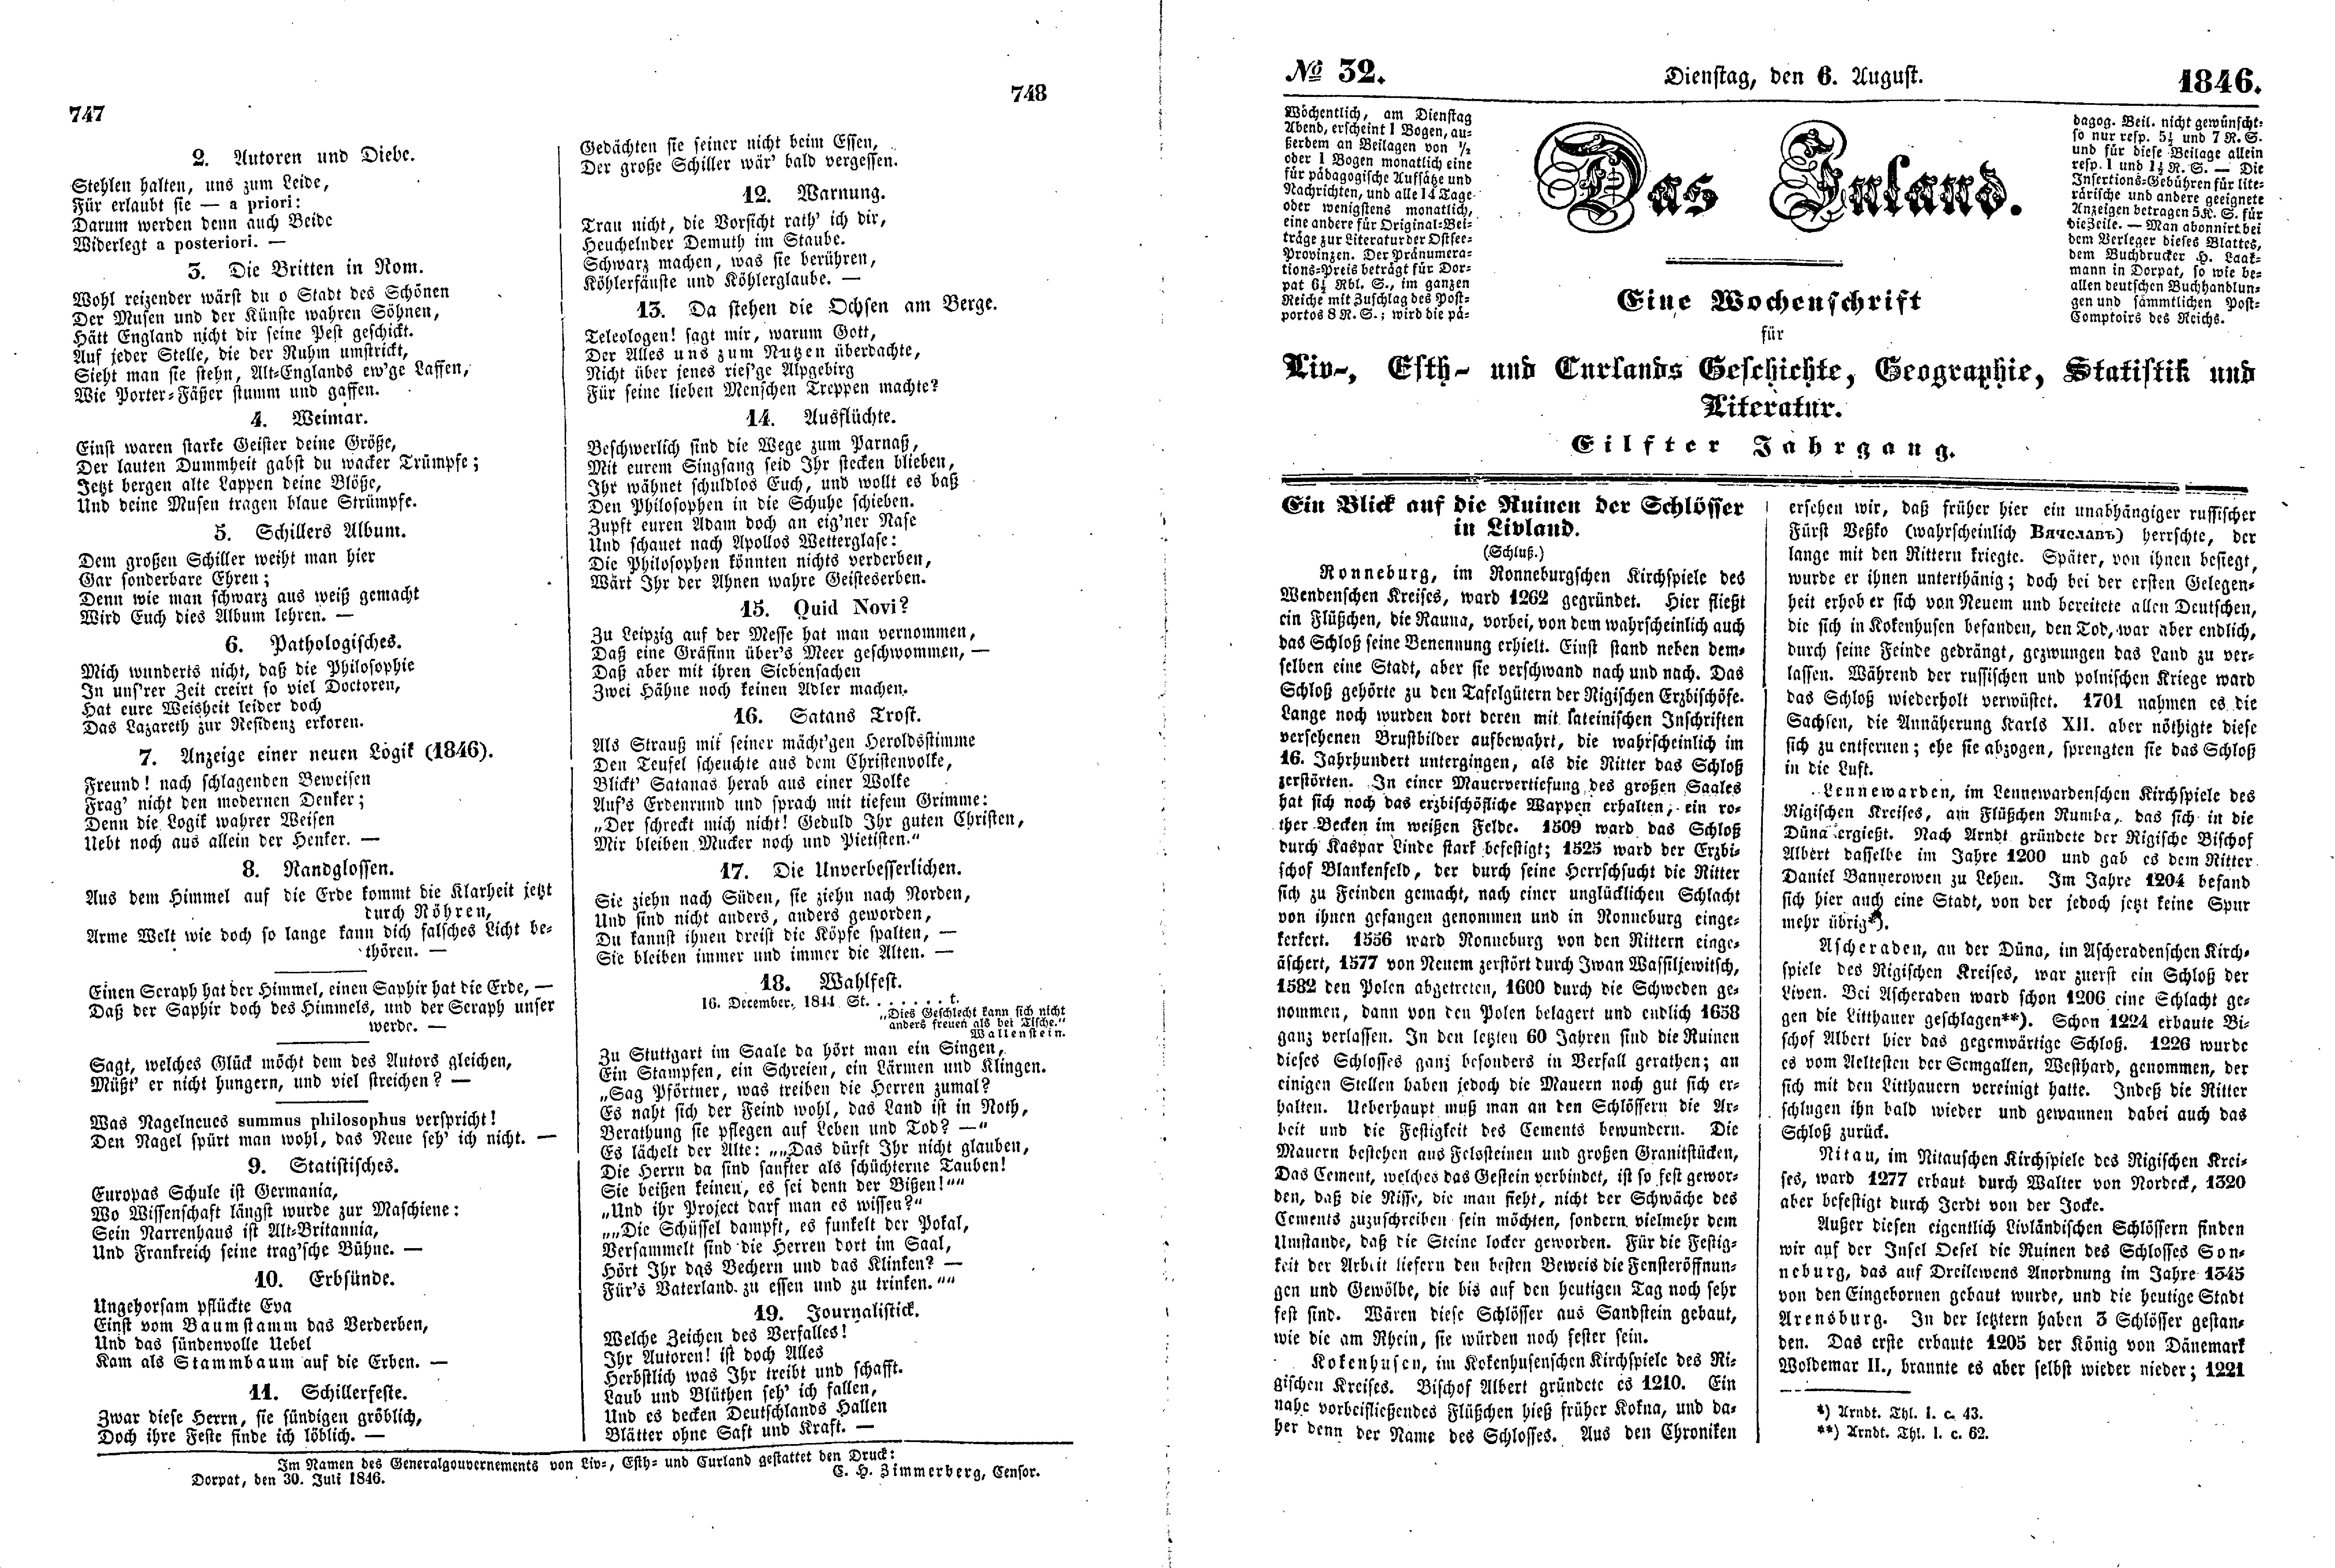 Das Inland [11] (1846) | 192. (747-750) Main body of text